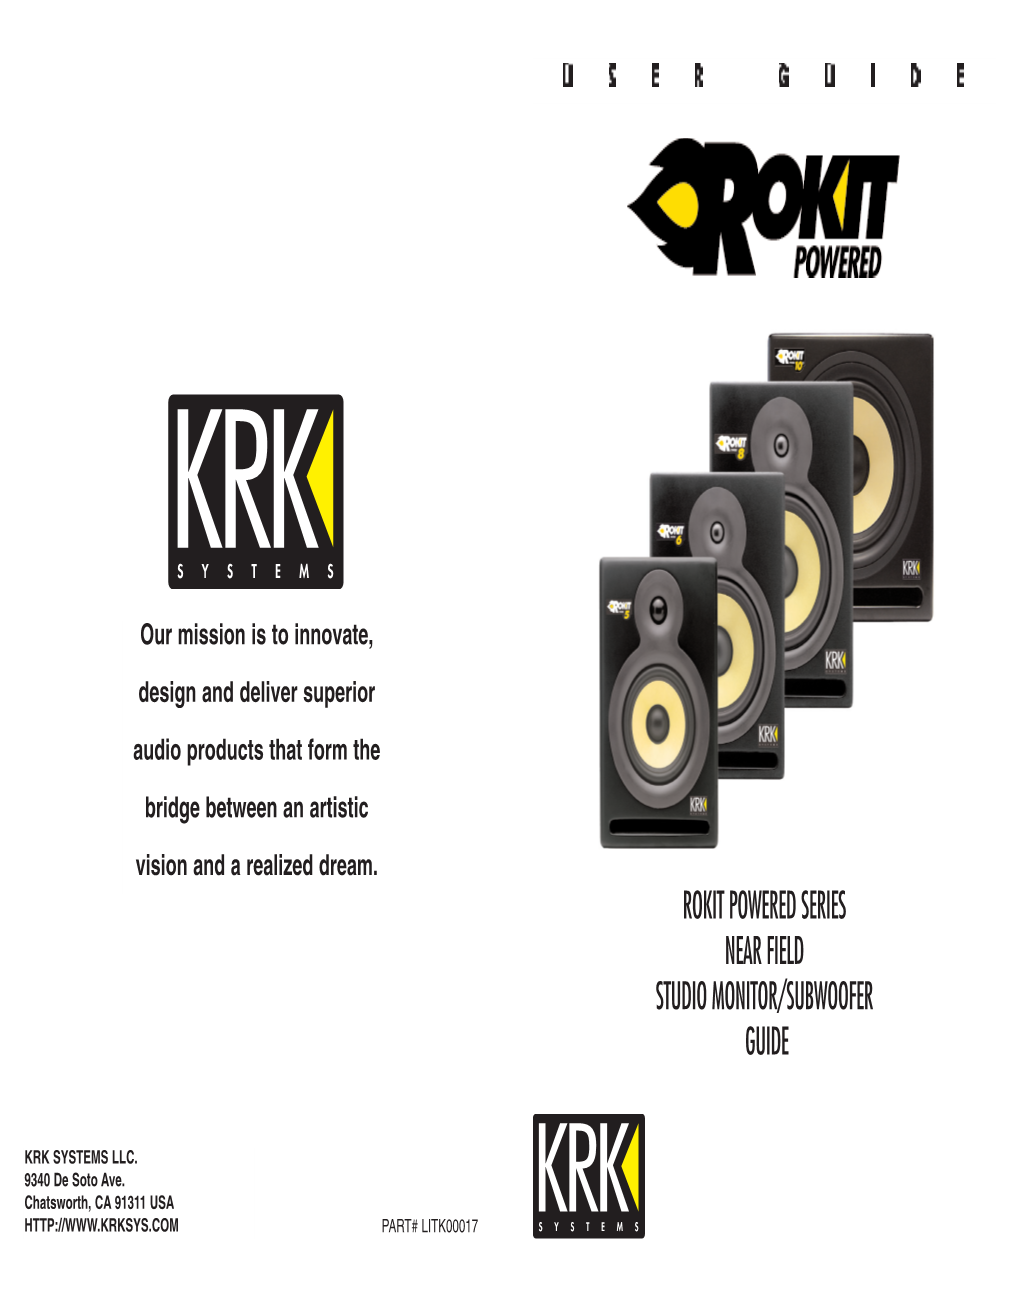 Rokit Powered Series Near Field Studio Monitor/Subwoofer Guide